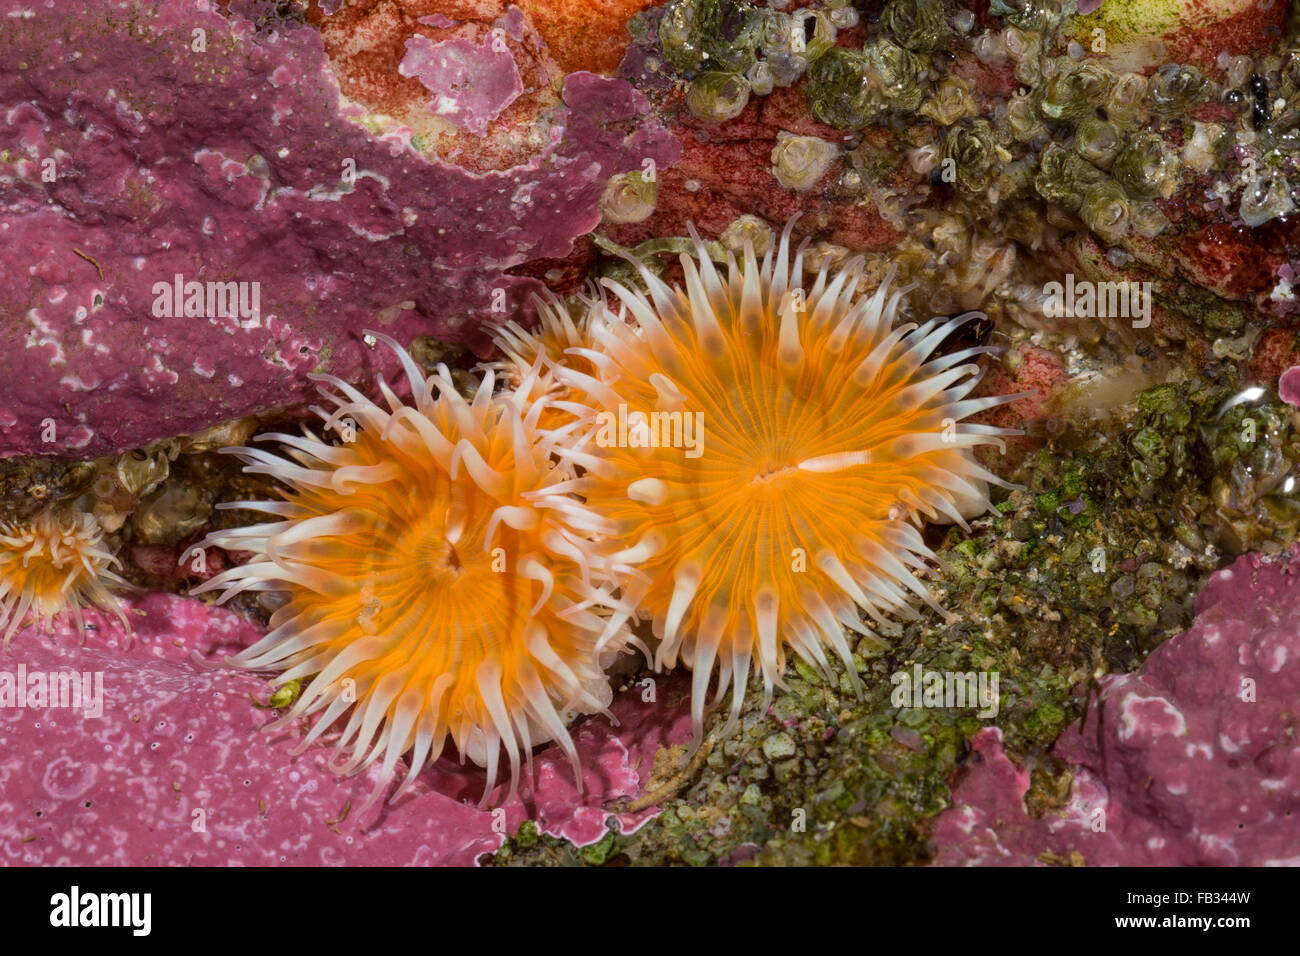 Elegant anemone, Tangrose, Sagartia elegans, Sagartia elegans var. venusta, Actinia elegans, sagartie de vase, Seeanemone Stock Photo